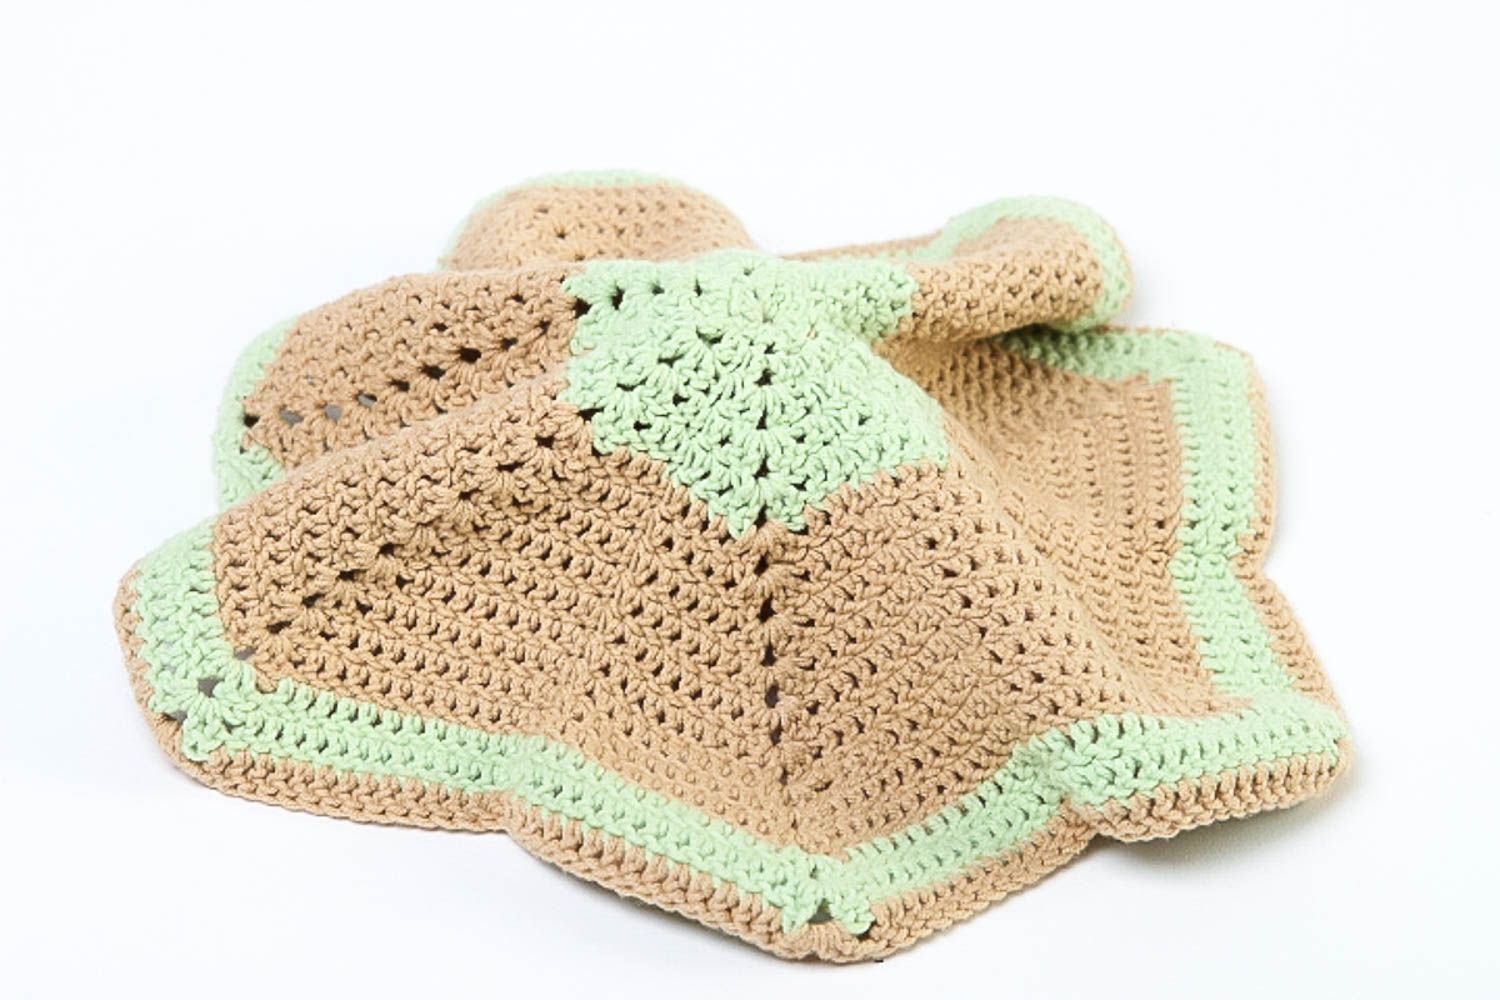 Handmade crocheted toy for babies nursery decor ideas stuffed toy for children photo 4